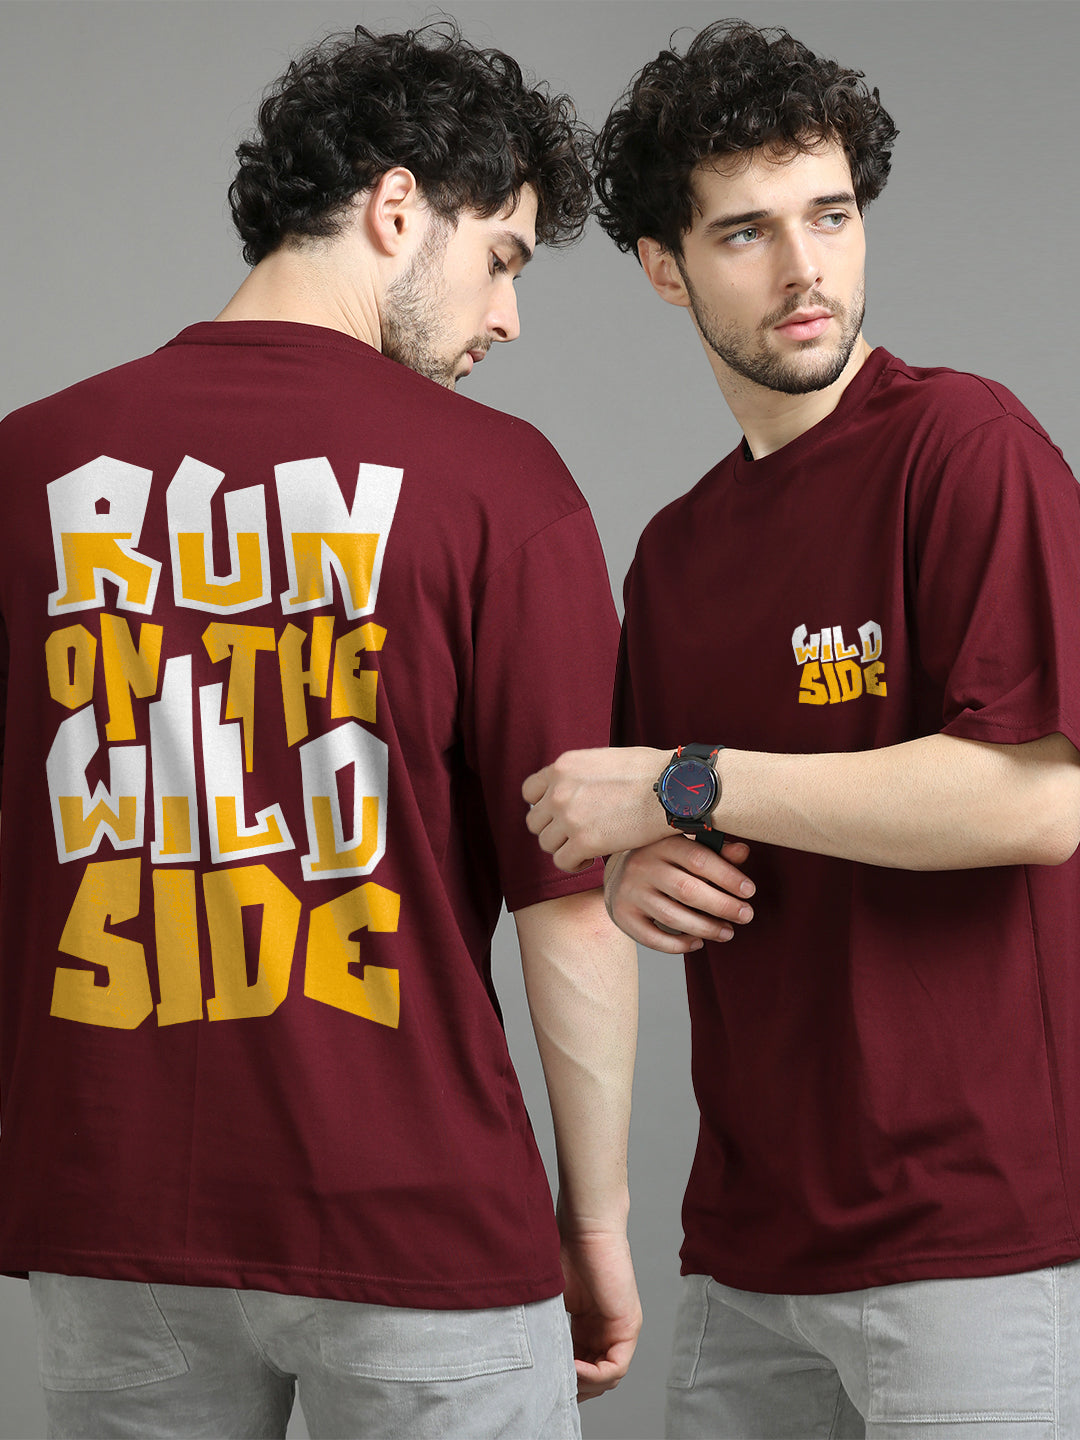 Run On The Wild Side Oversize T-Shirt Oversize T-Shirt Bushirt   